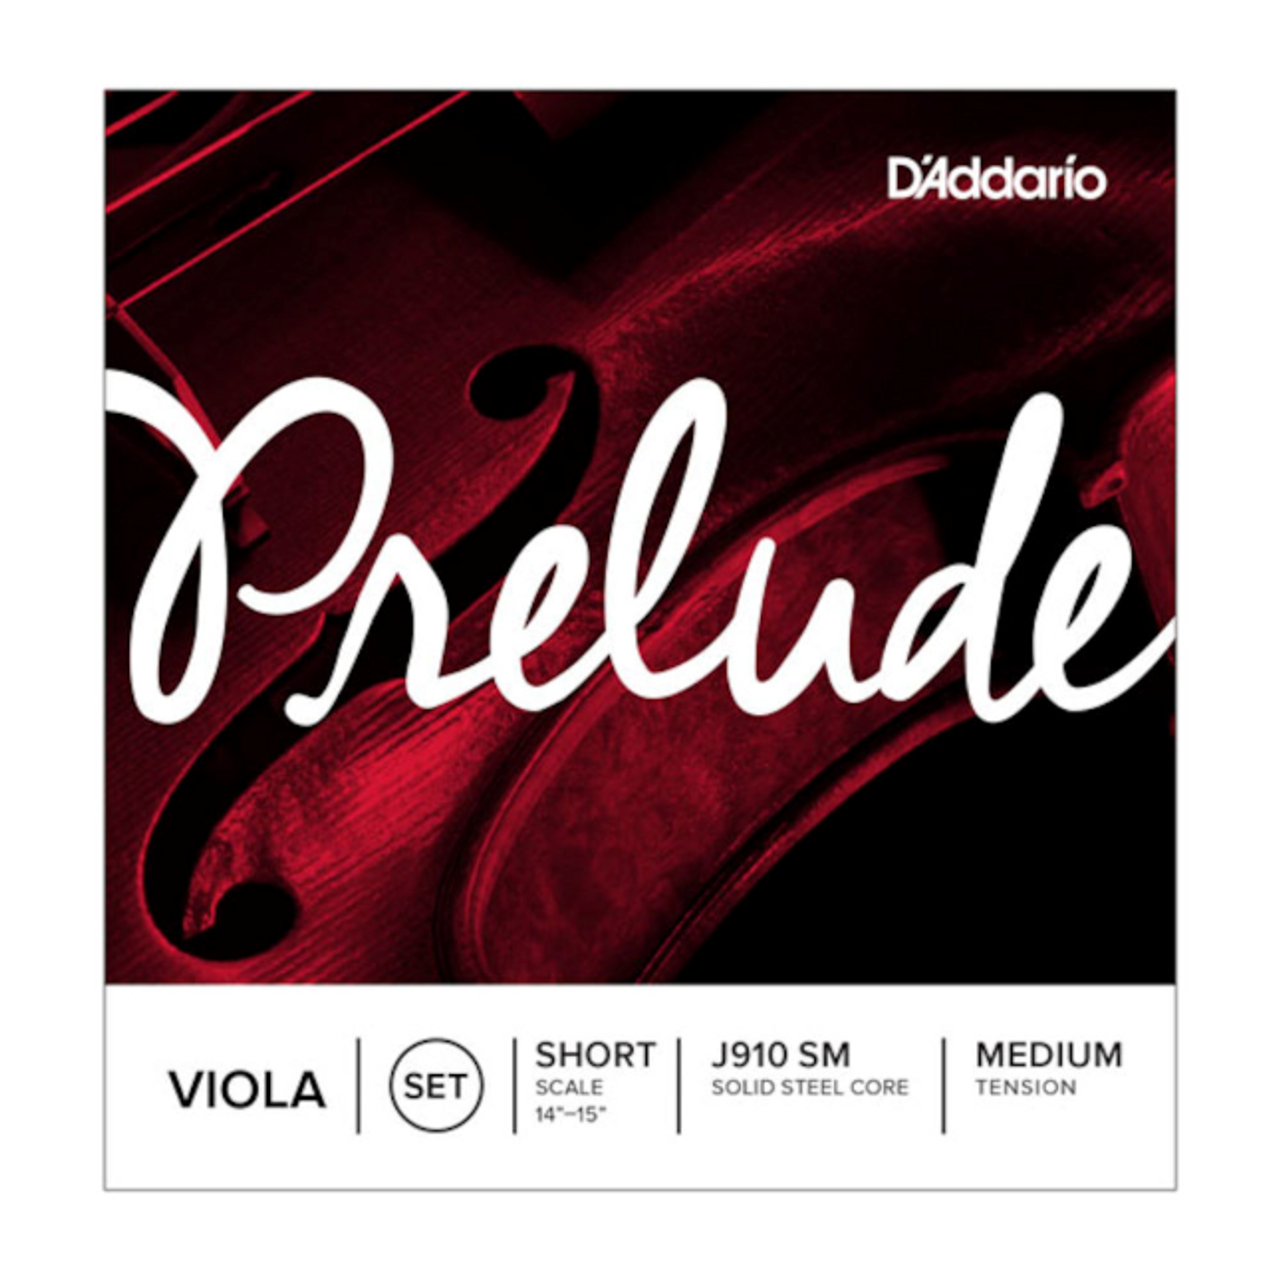 Prelude Viola String Set, Short Scale, Medium Tension